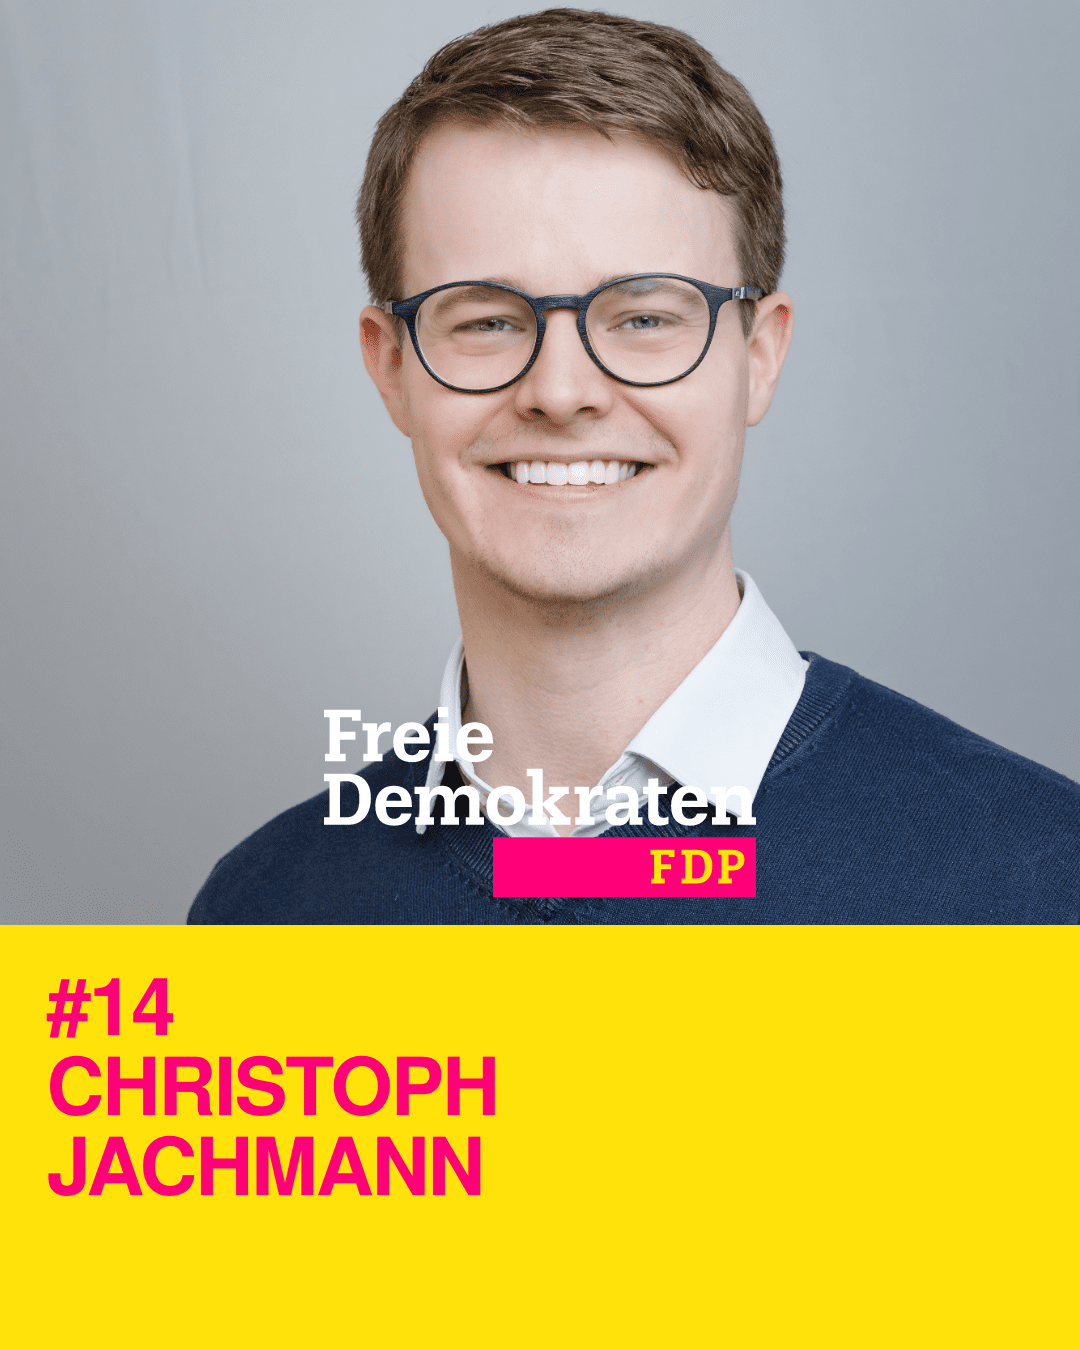 Christoph Jachmann